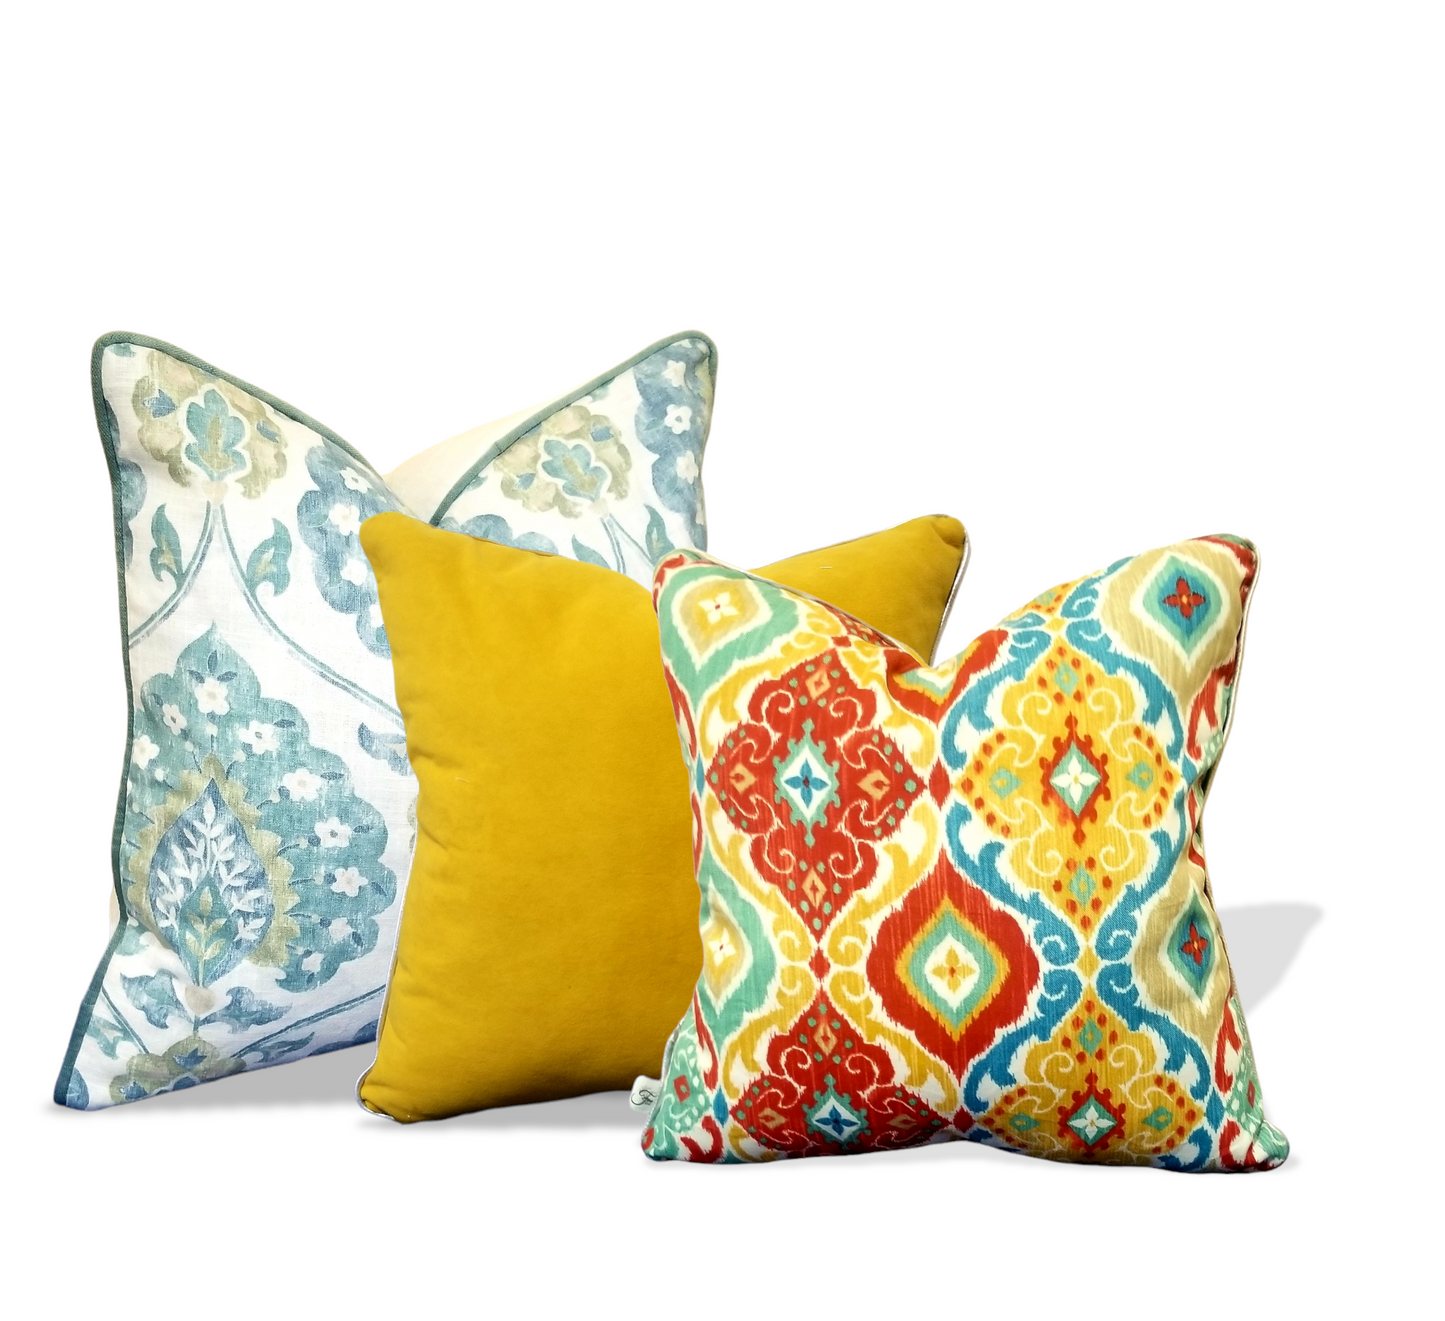 Fresca Fiesta Decorative Designer Throw/Accent Pillow. - Advenique Home Decor